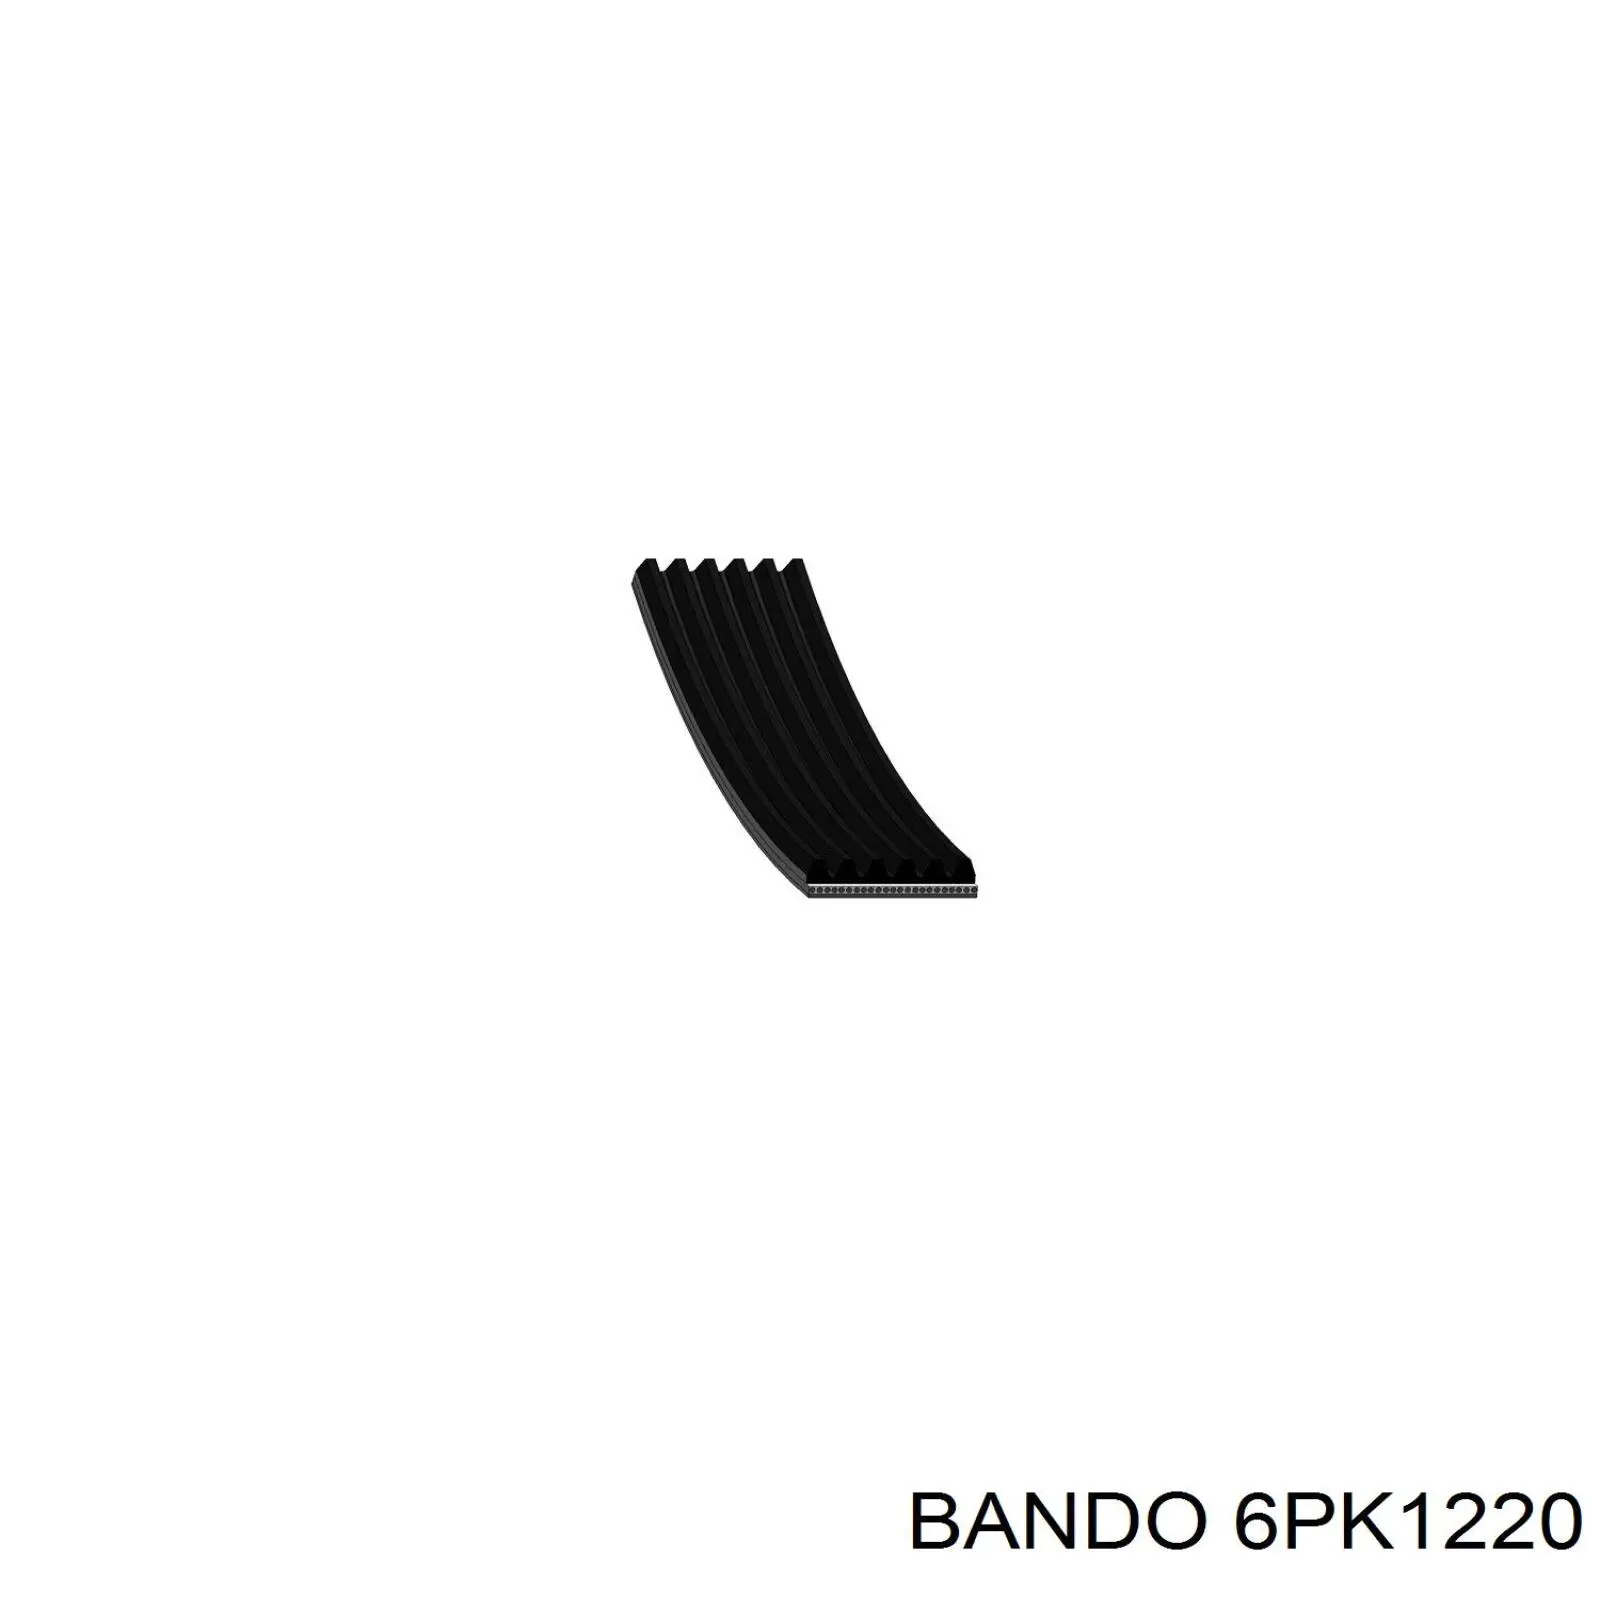 6PK1220 Bando correa trapezoidal